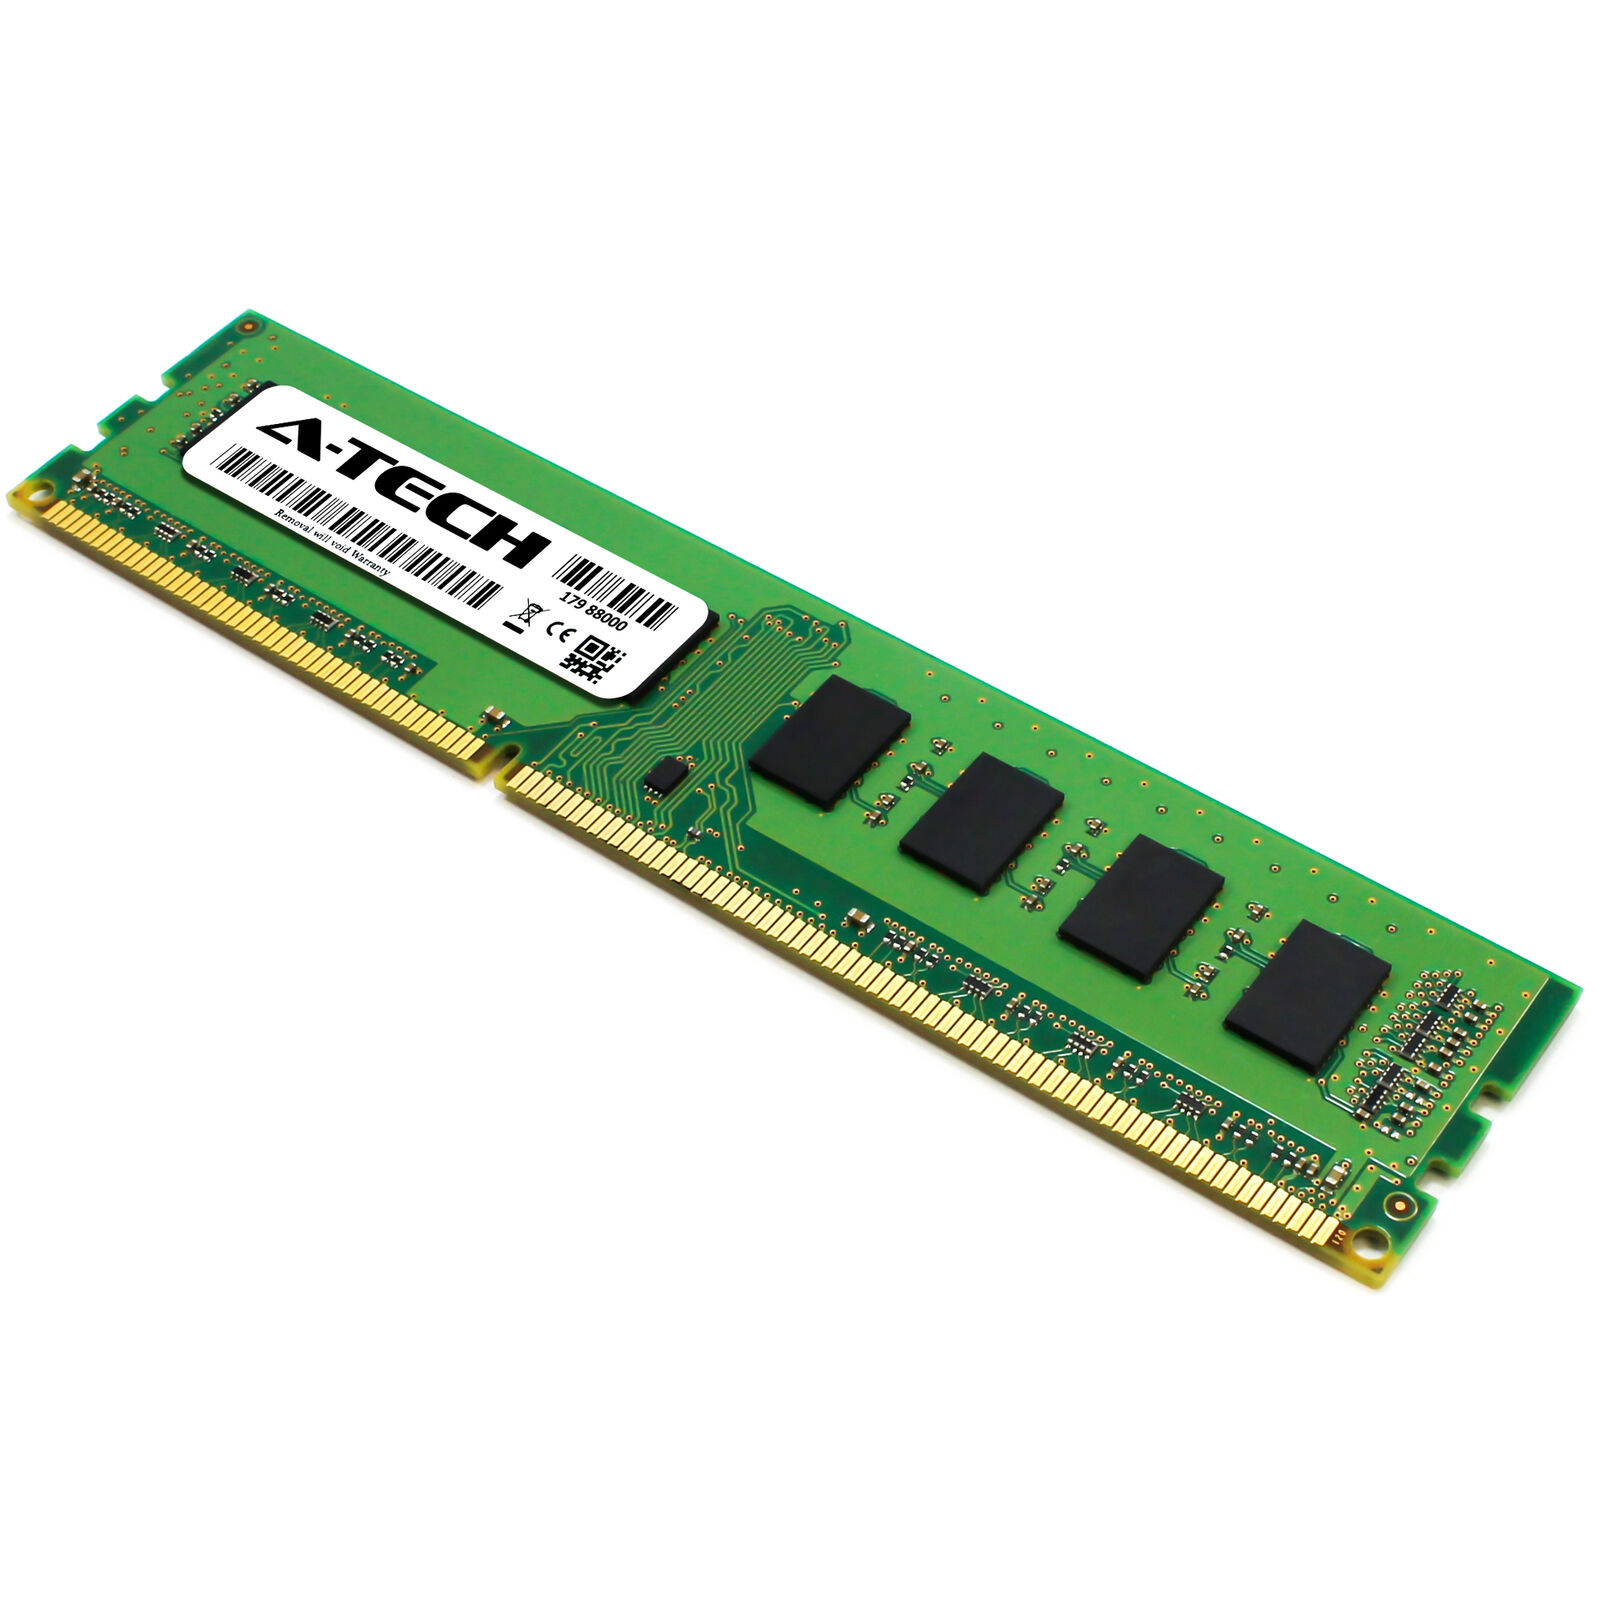 4GB PC3-10600 DDR3 1333 MHz Memory RAM for DELL OPTIPLEX 390 DESKTOP TOWER  PC 1x